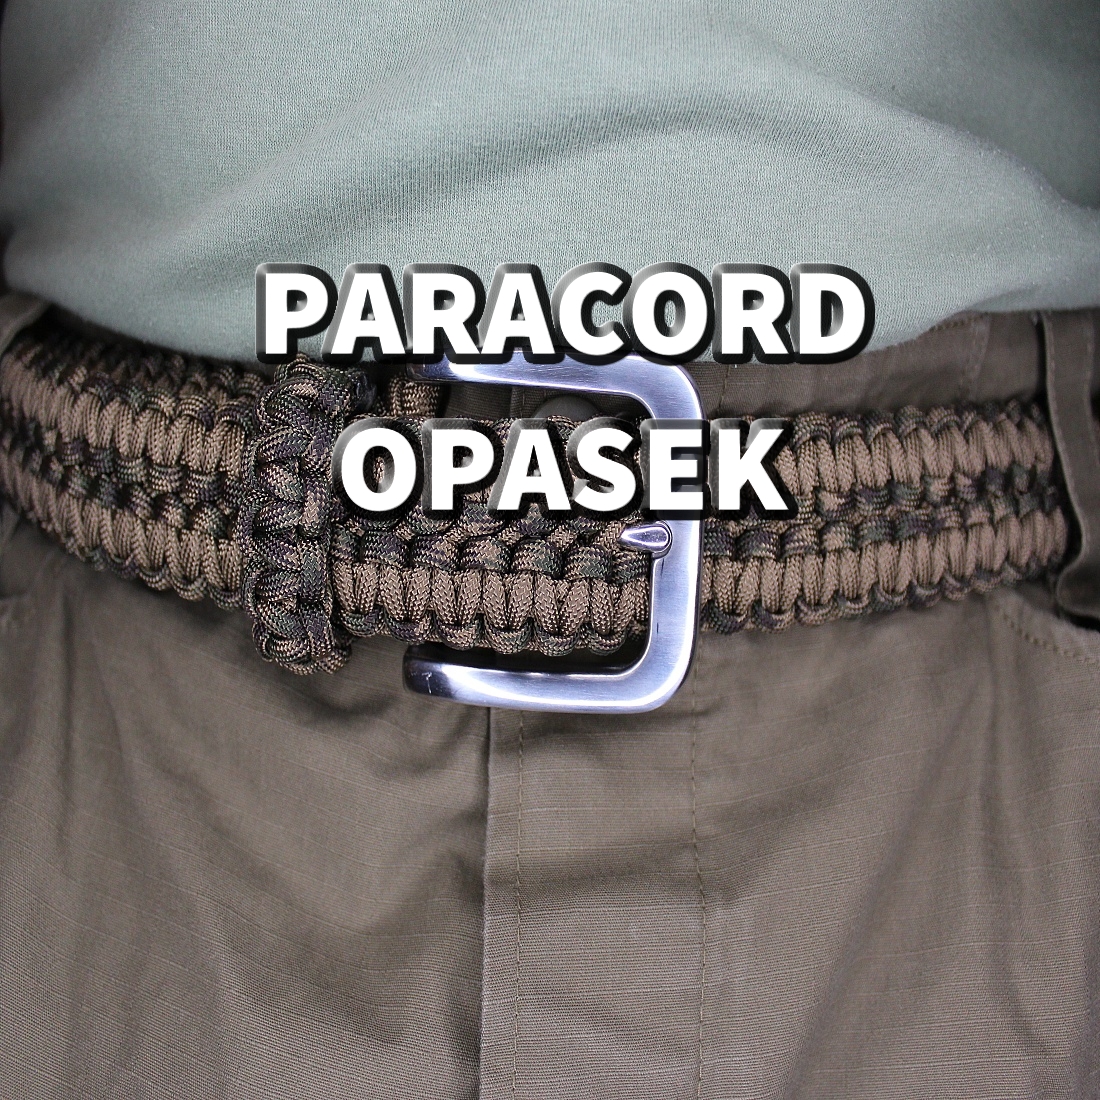 Paracord opasek